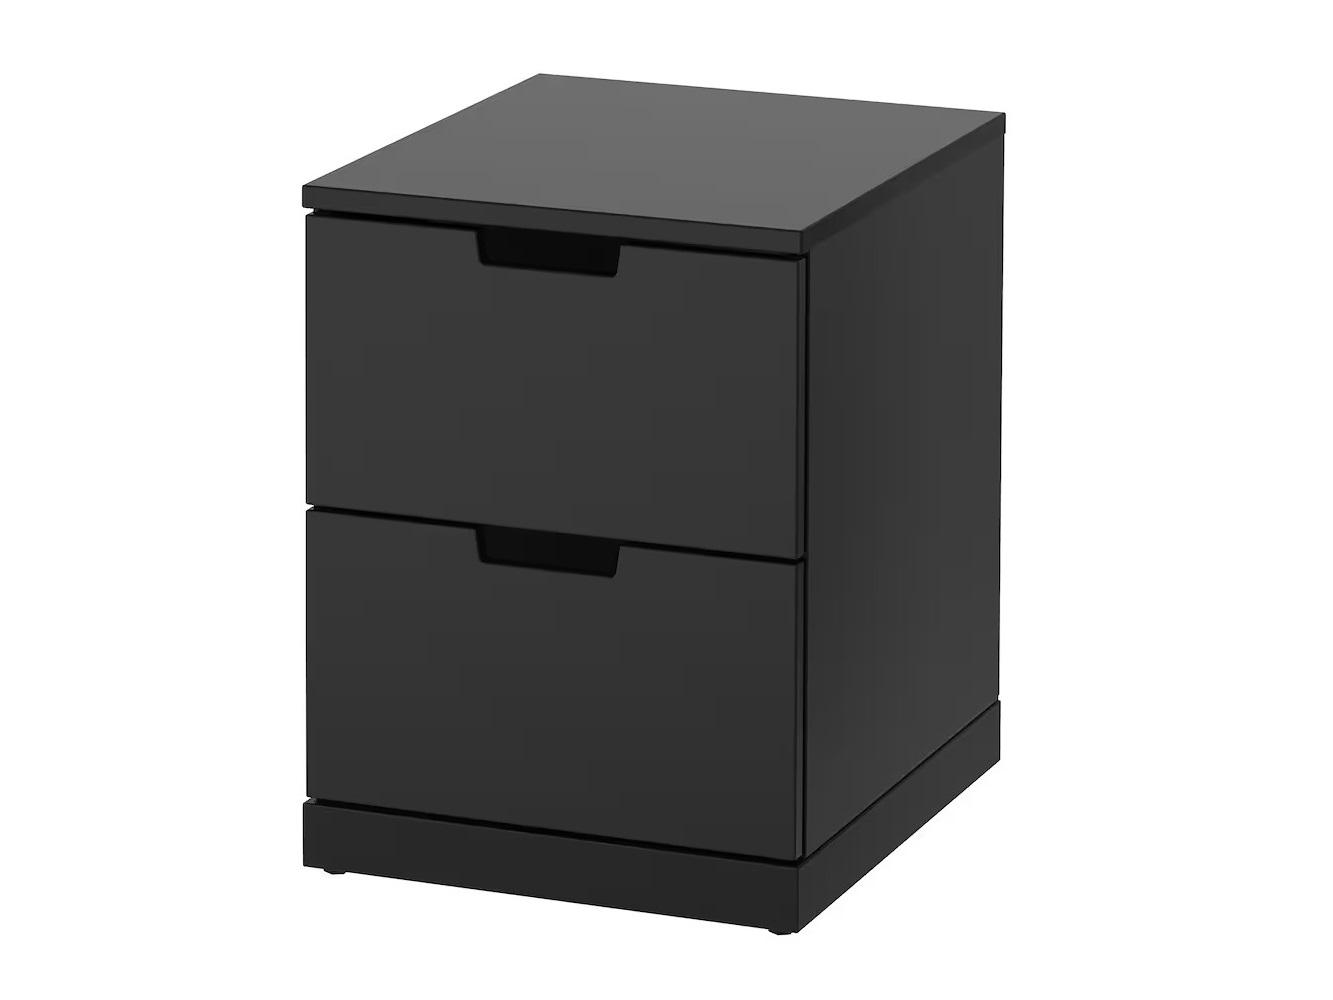 Изображение товара Прикроватная тумба Нордли 113 black ИКЕА (IKEA), 40x45x54 см на сайте adeta.ru